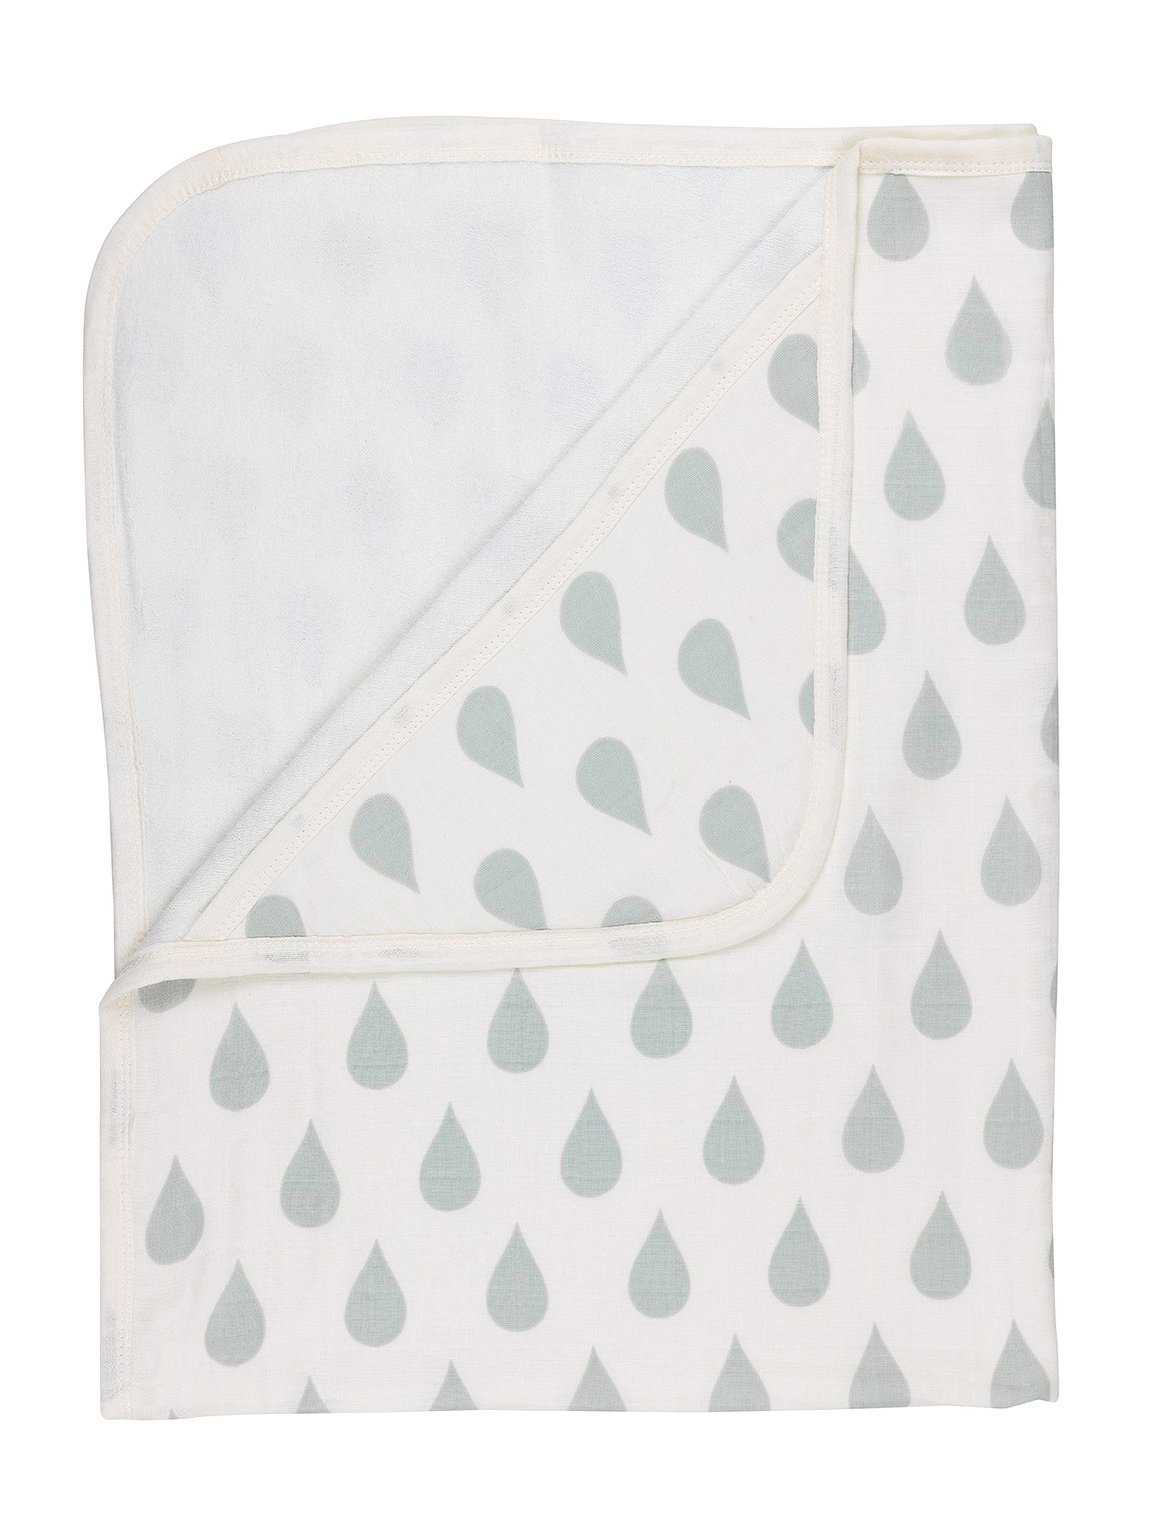 Hooded Towel - GOTS Certified Organic Cotton - Droplet Print Towel Huggee 